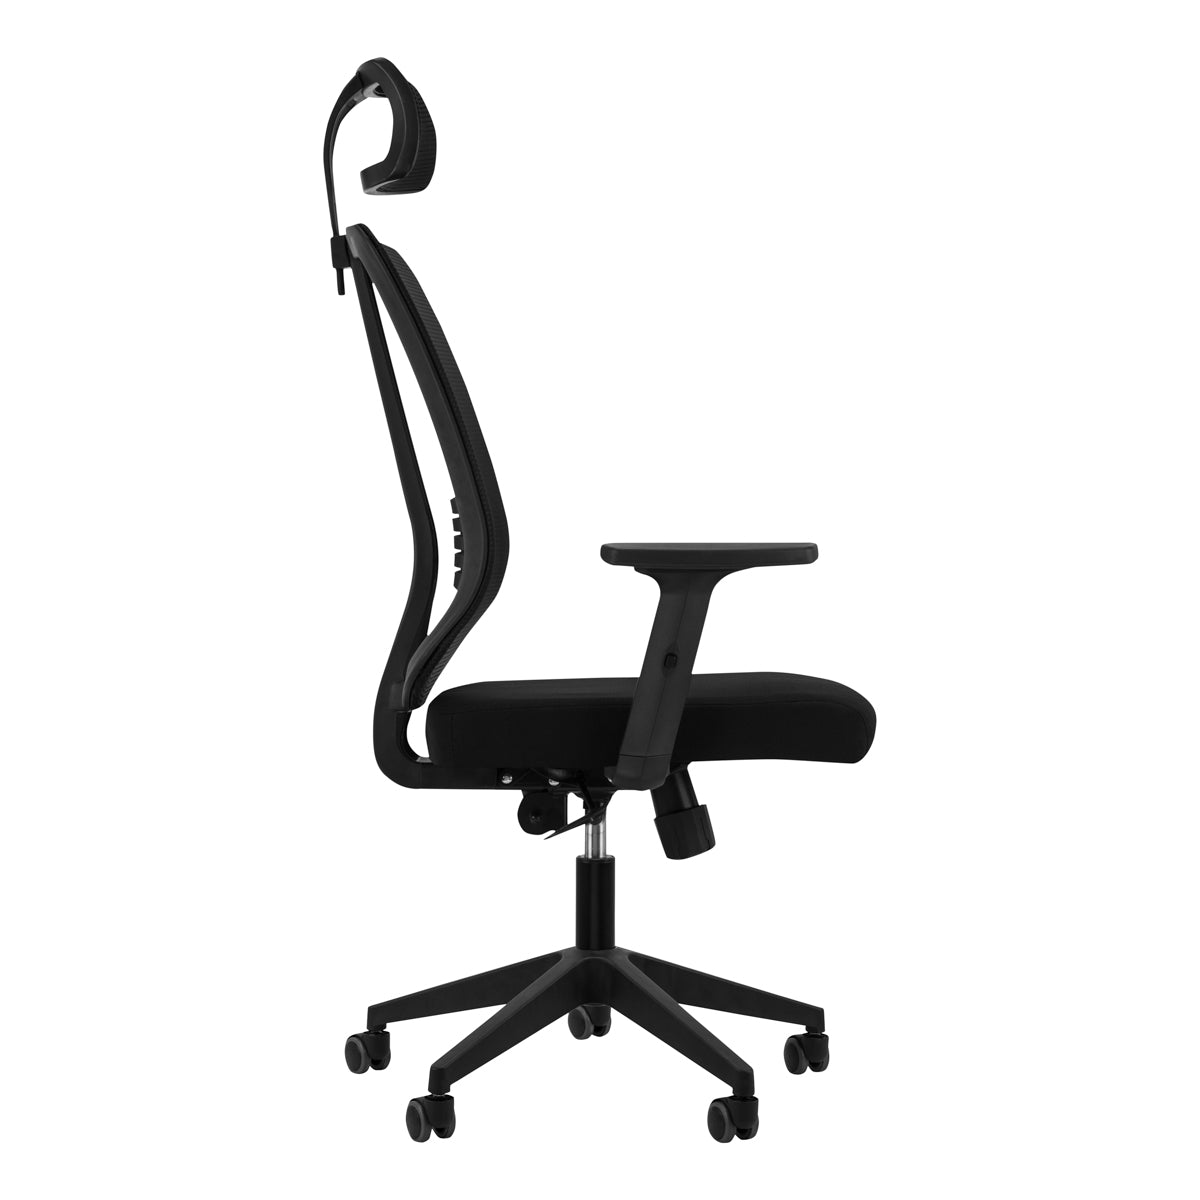 ActiveShop Office / Manicure Chair QS-16A Black